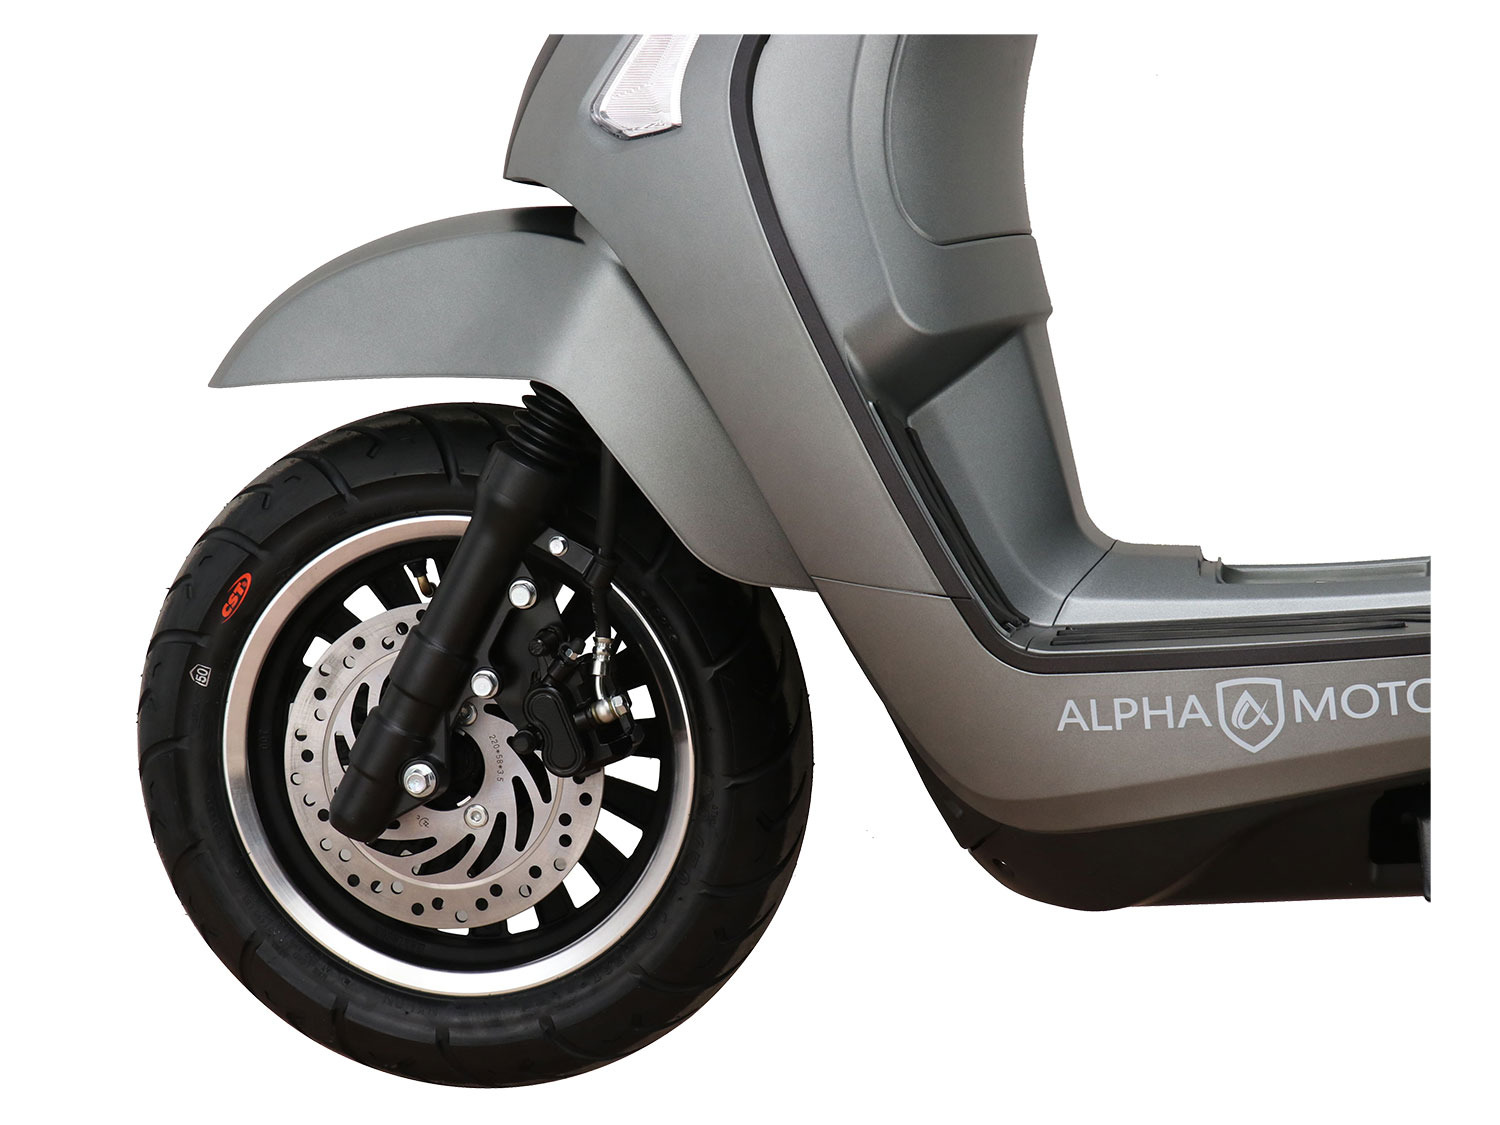 Alpha Motors Mofaroller Vita 50 45 ccm 25 km/h km/h,… 